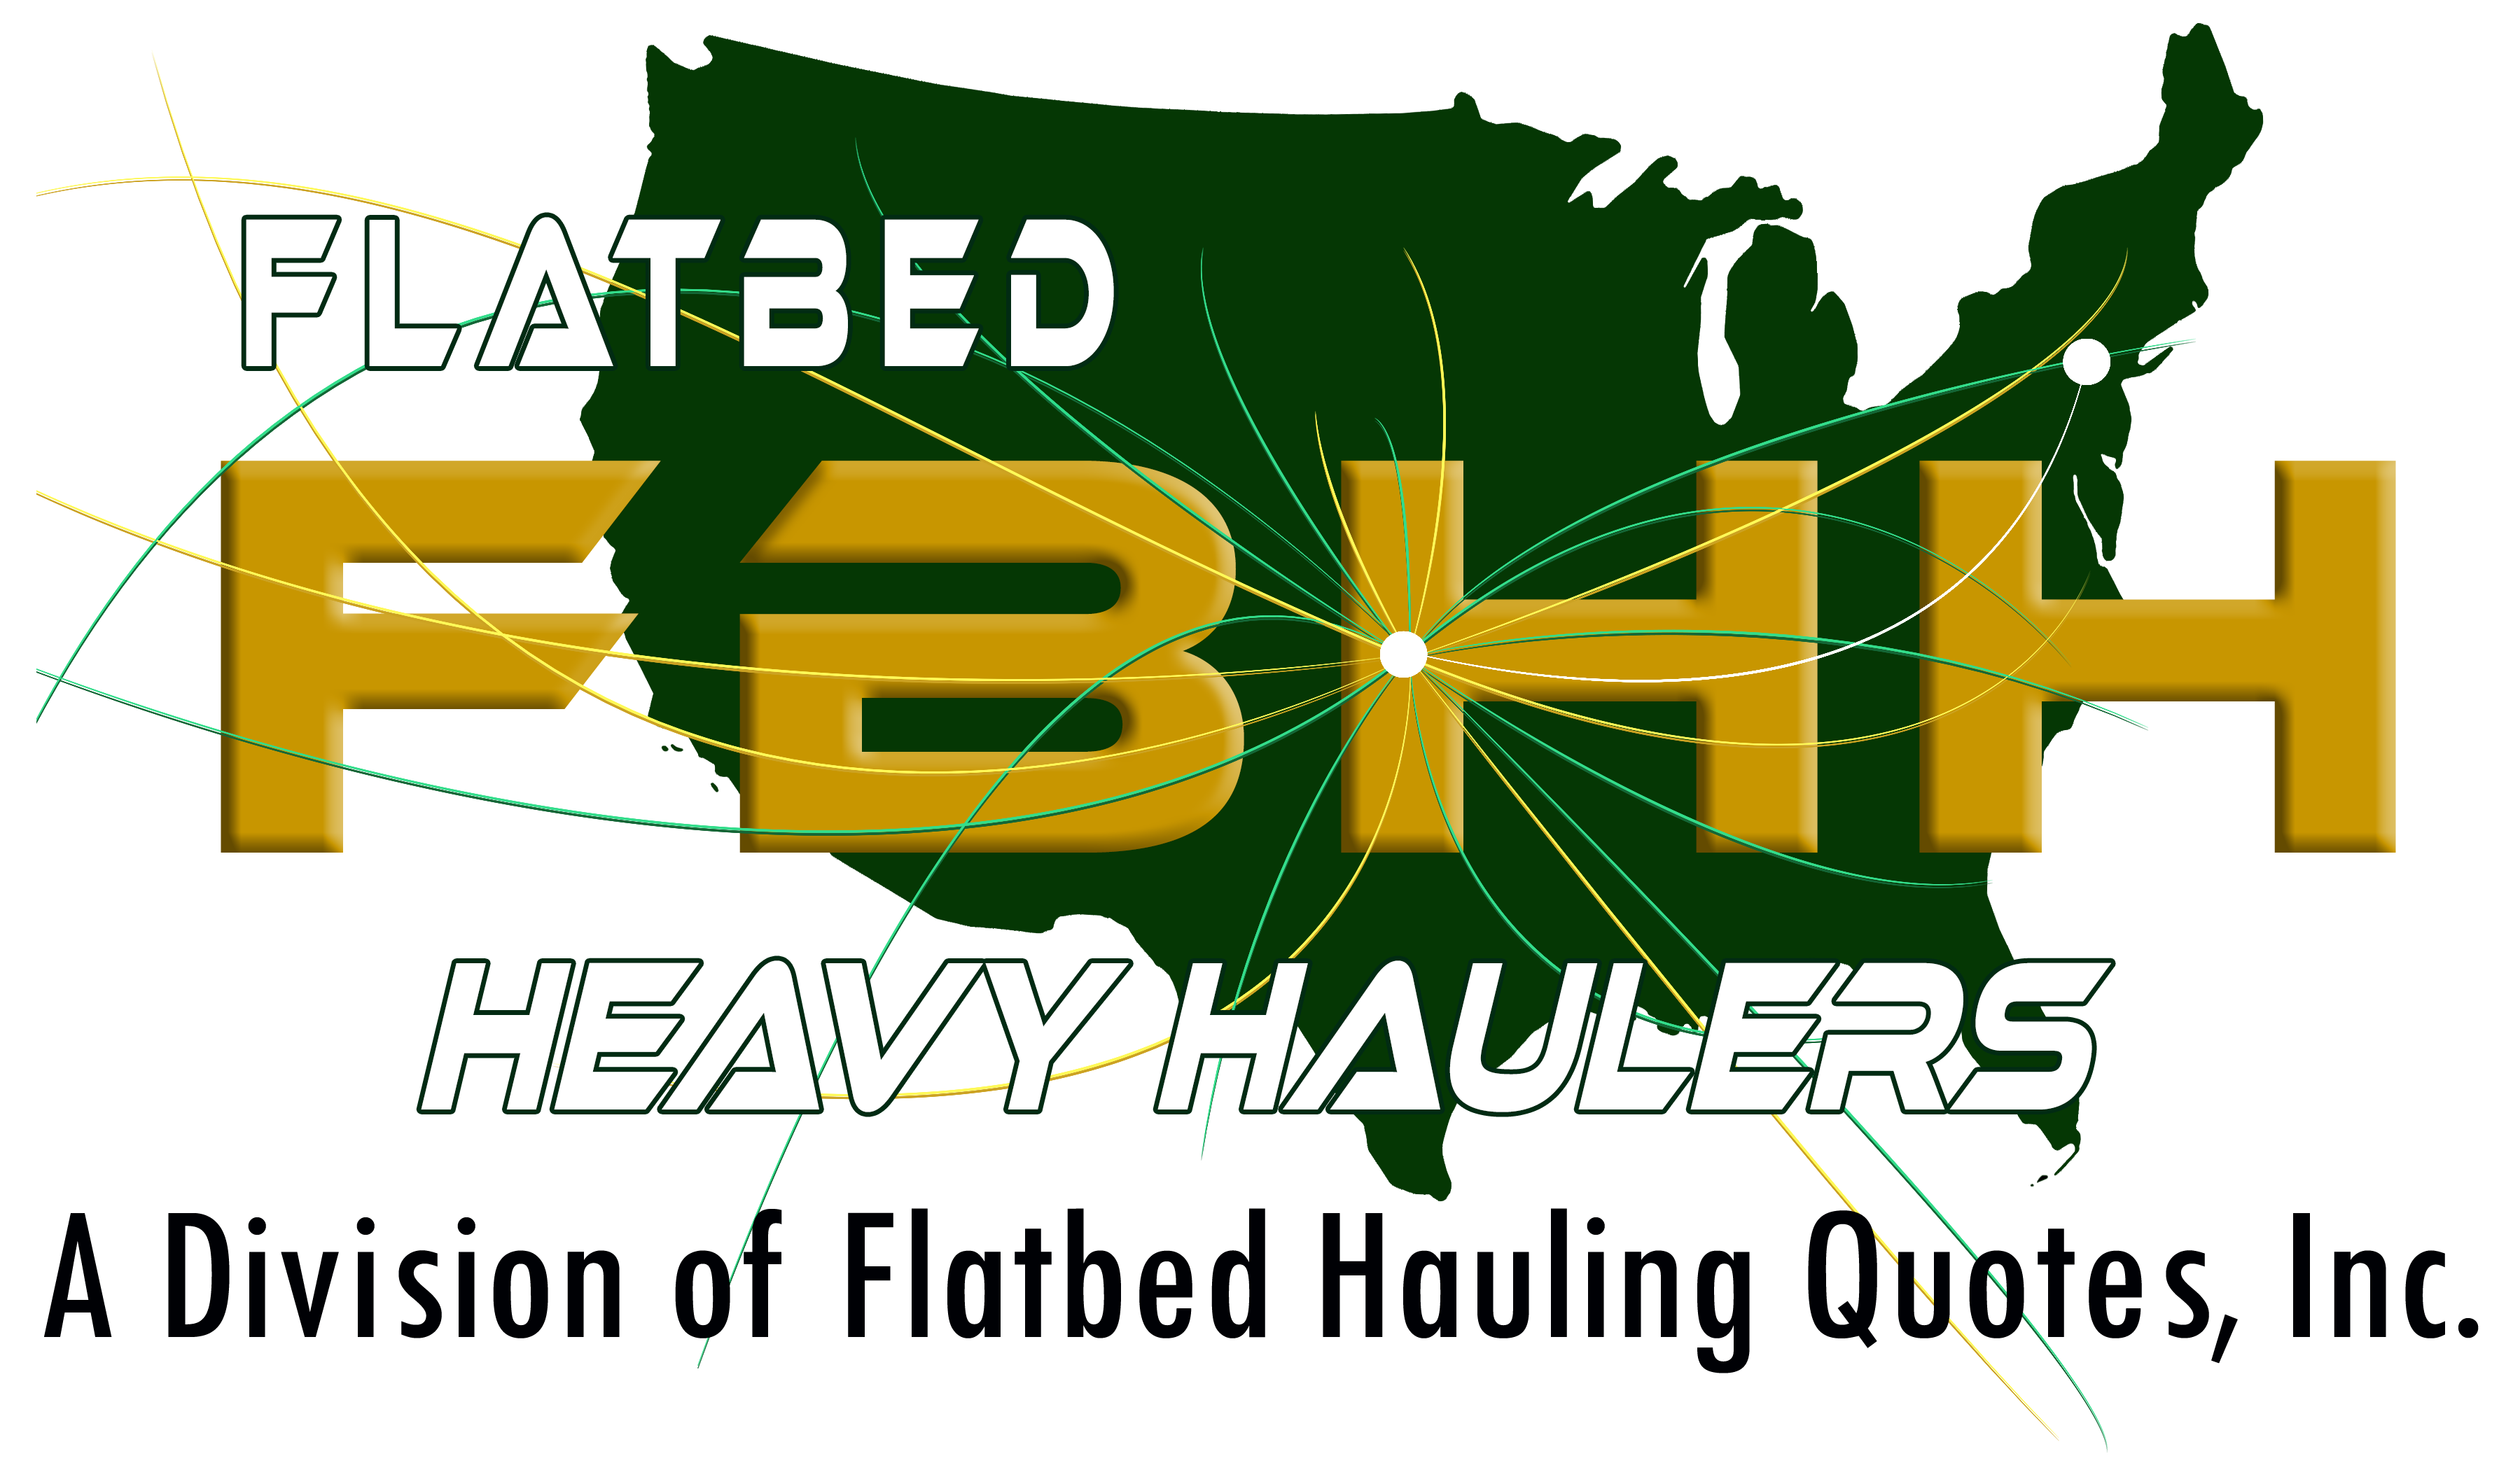 Flatbed Heavy Haulers